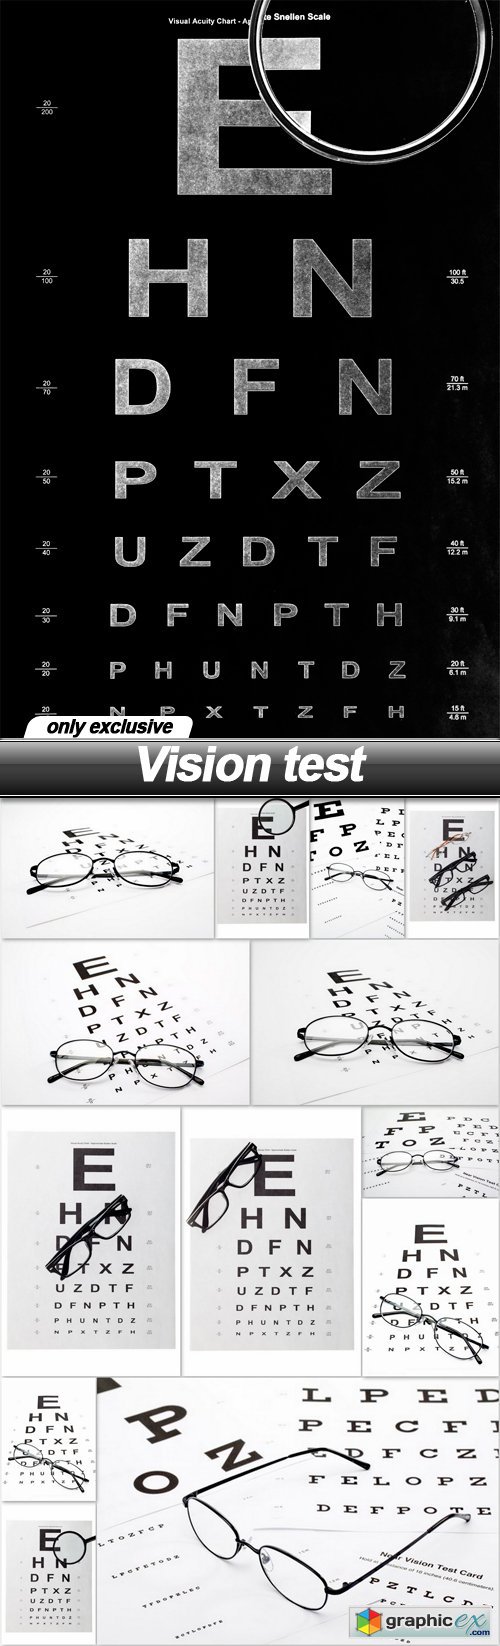 Vision test - 14 UHQ JPEG